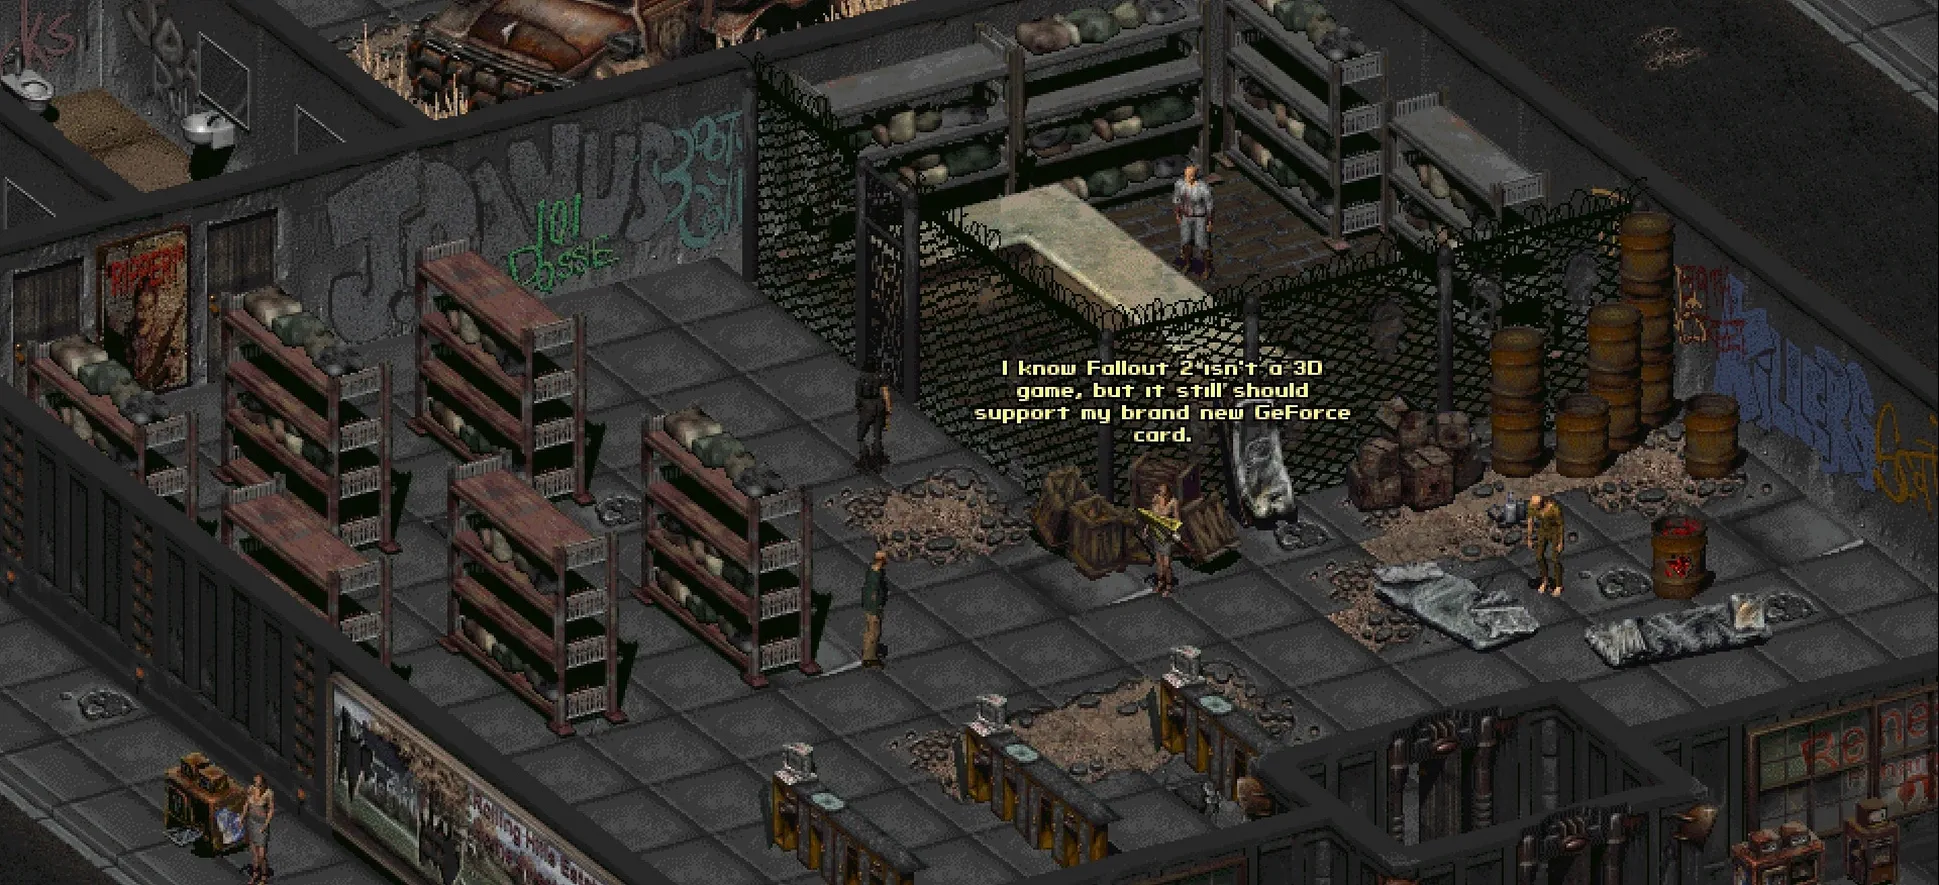 Скриншот Fallout 2: Общий вид и смешнявки по поводу видеокарты.